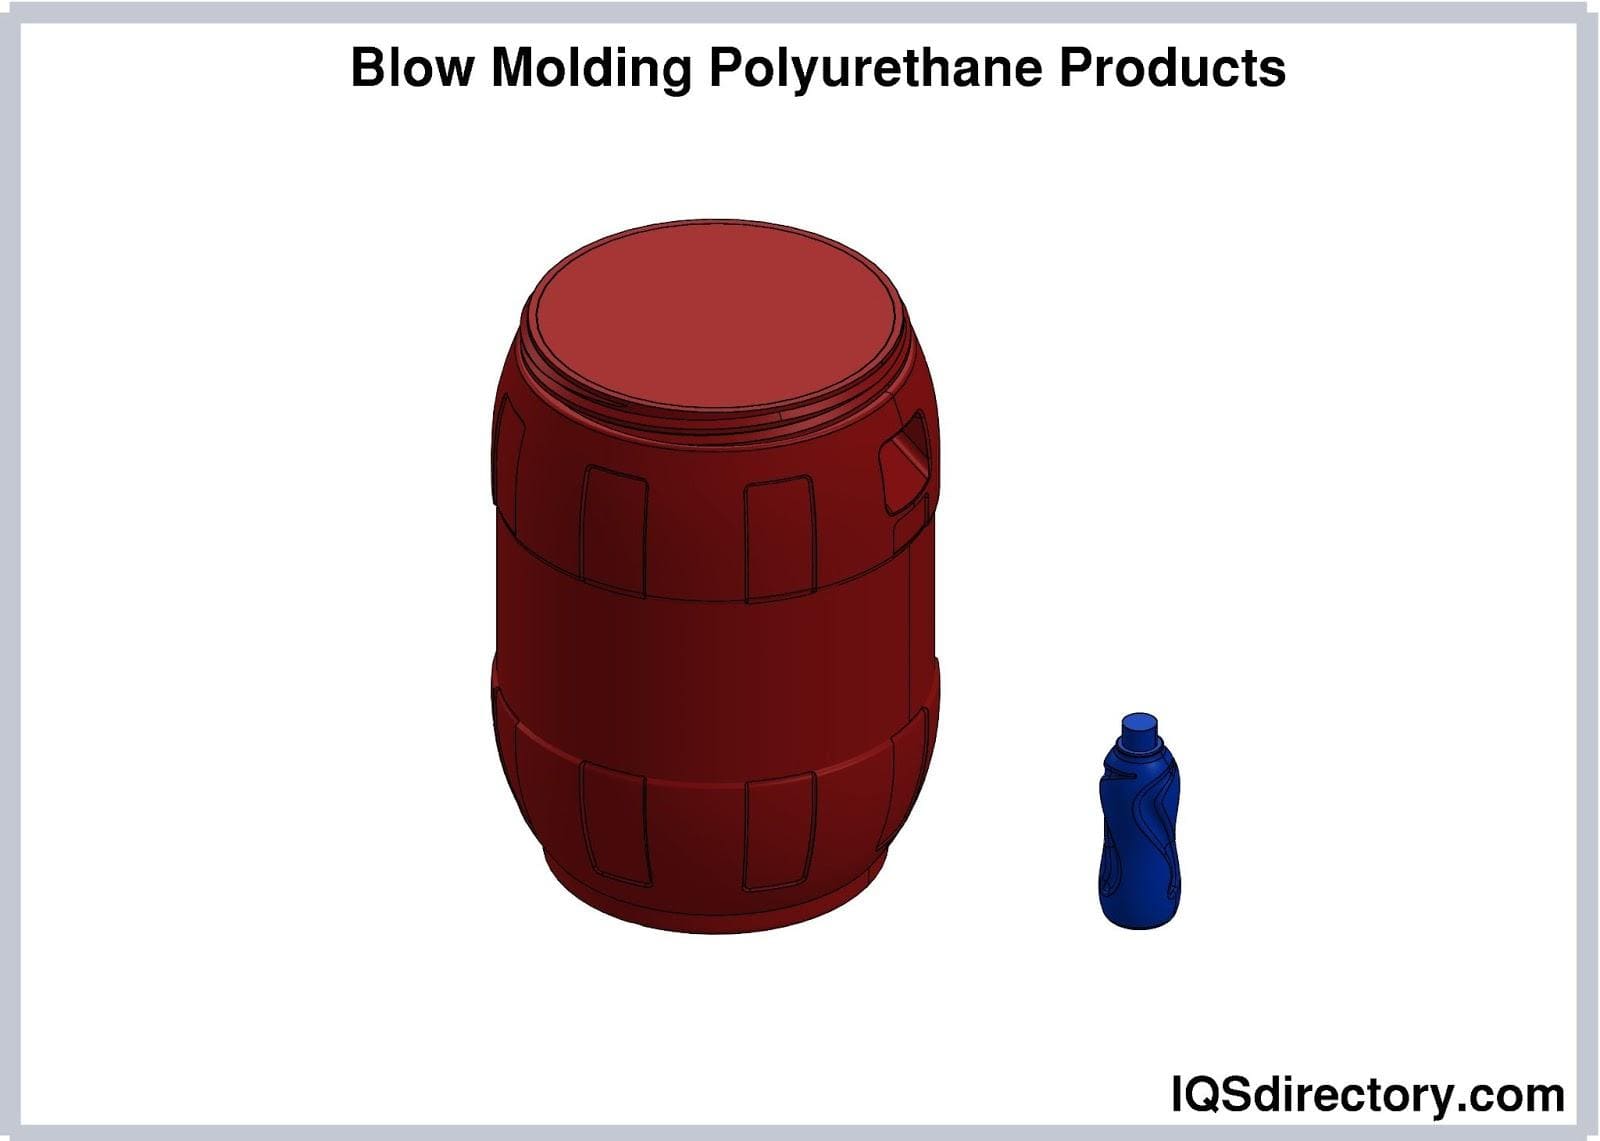 Blow Molding Polyurethane Products